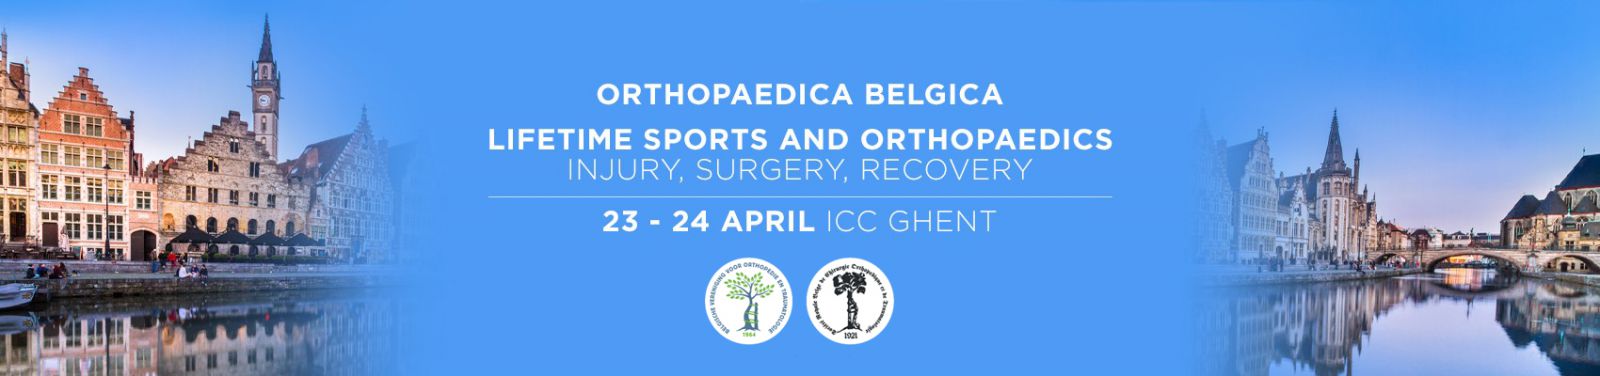 Orthopaedica Belgica 2020